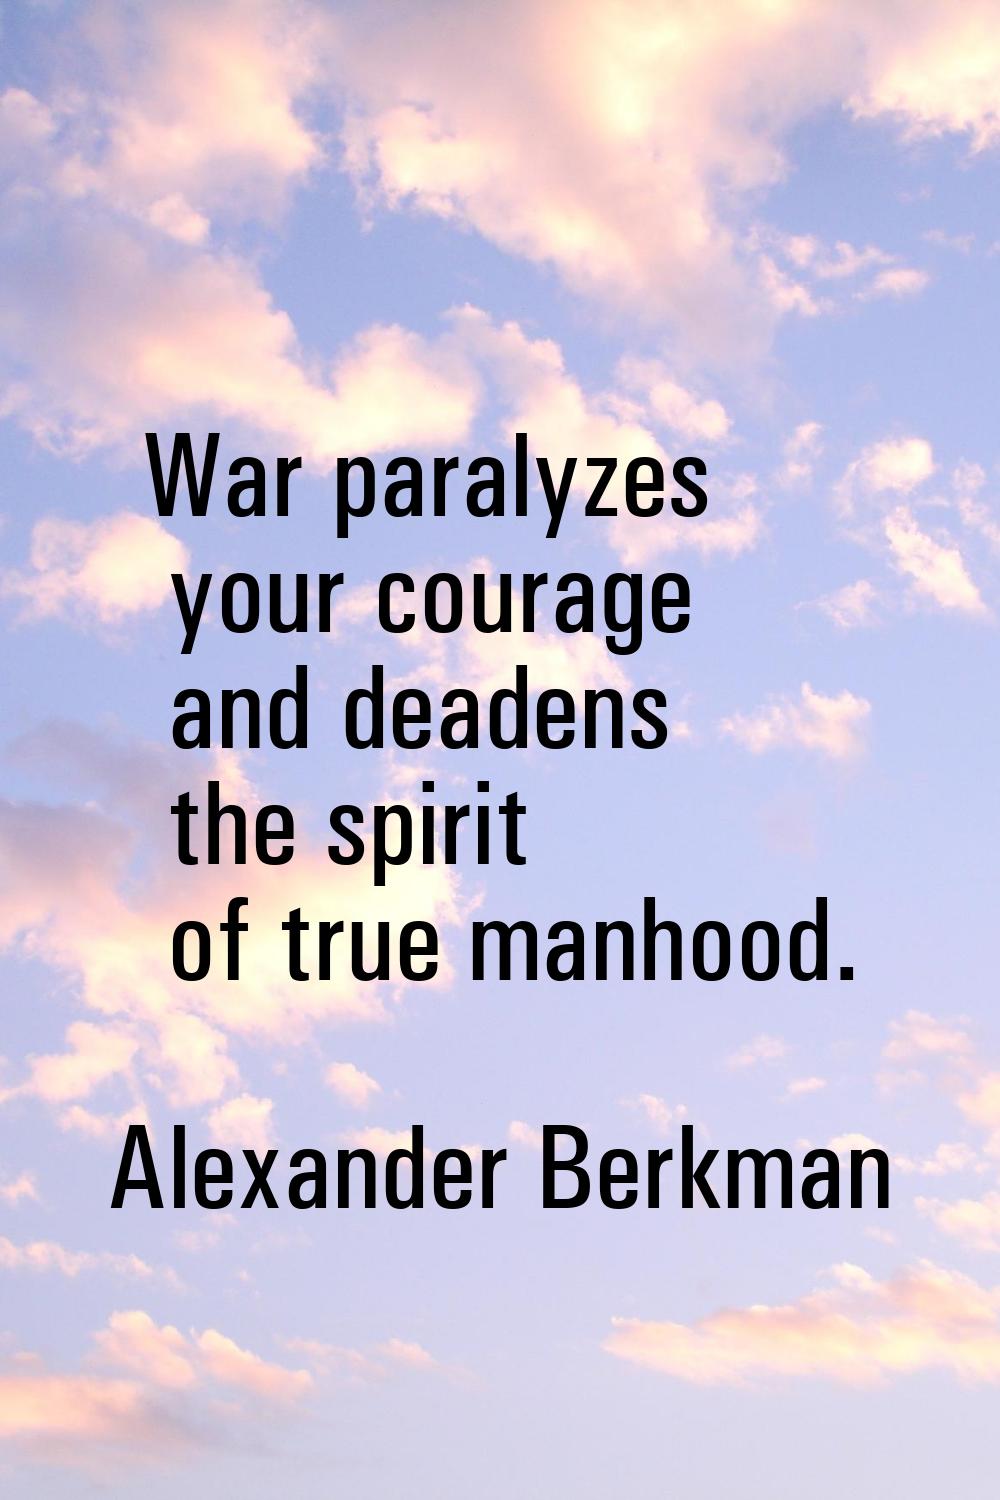 War paralyzes your courage and deadens the spirit of true manhood.